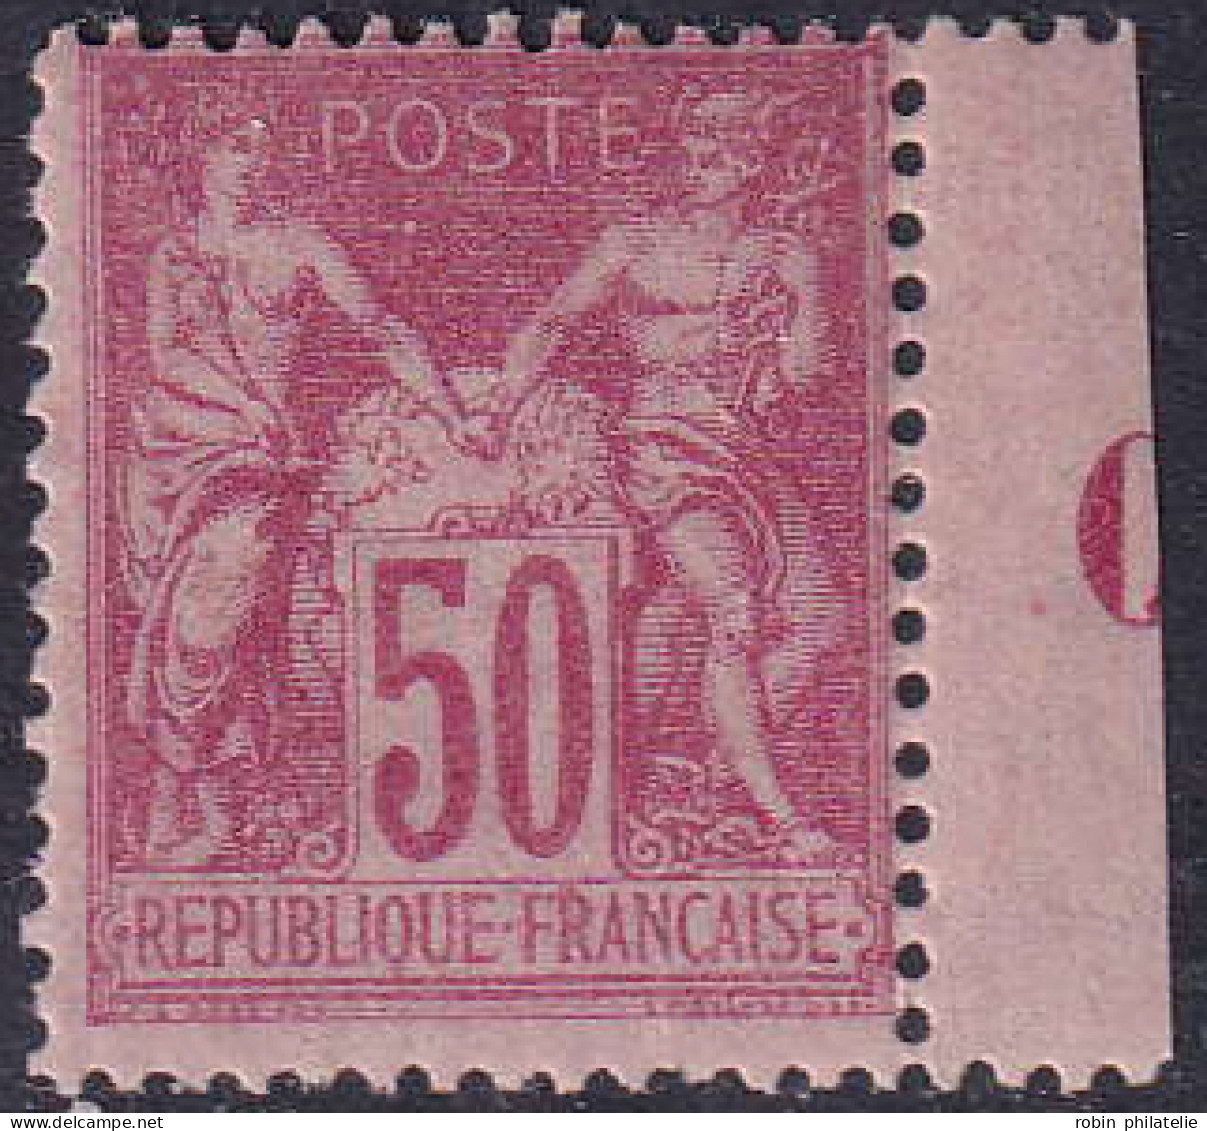 France N°104 50c Rose Bdf Qualité:** - 1898-1900 Sage (Type III)